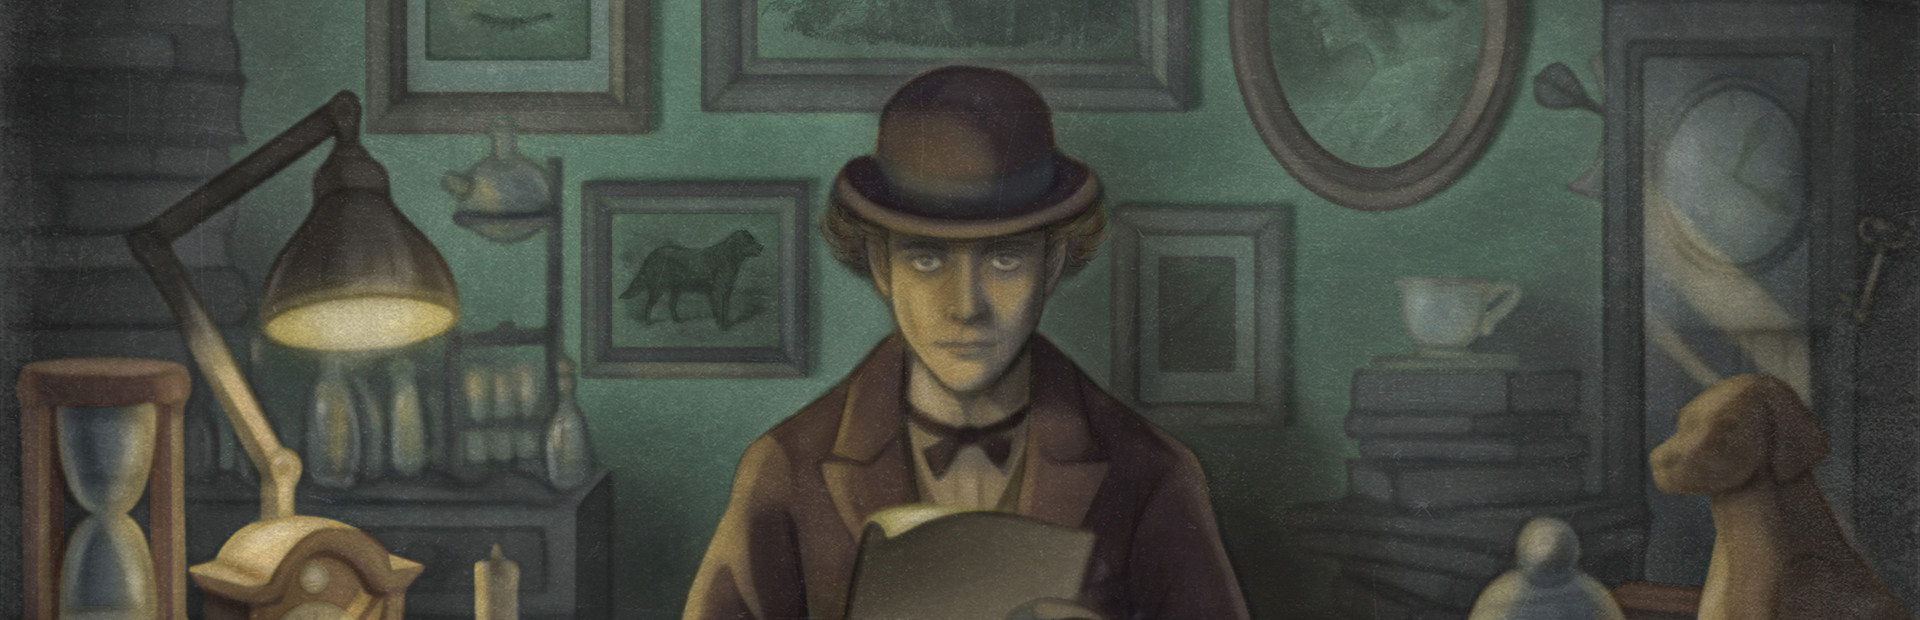 The Franz Kafka Videogame cover image